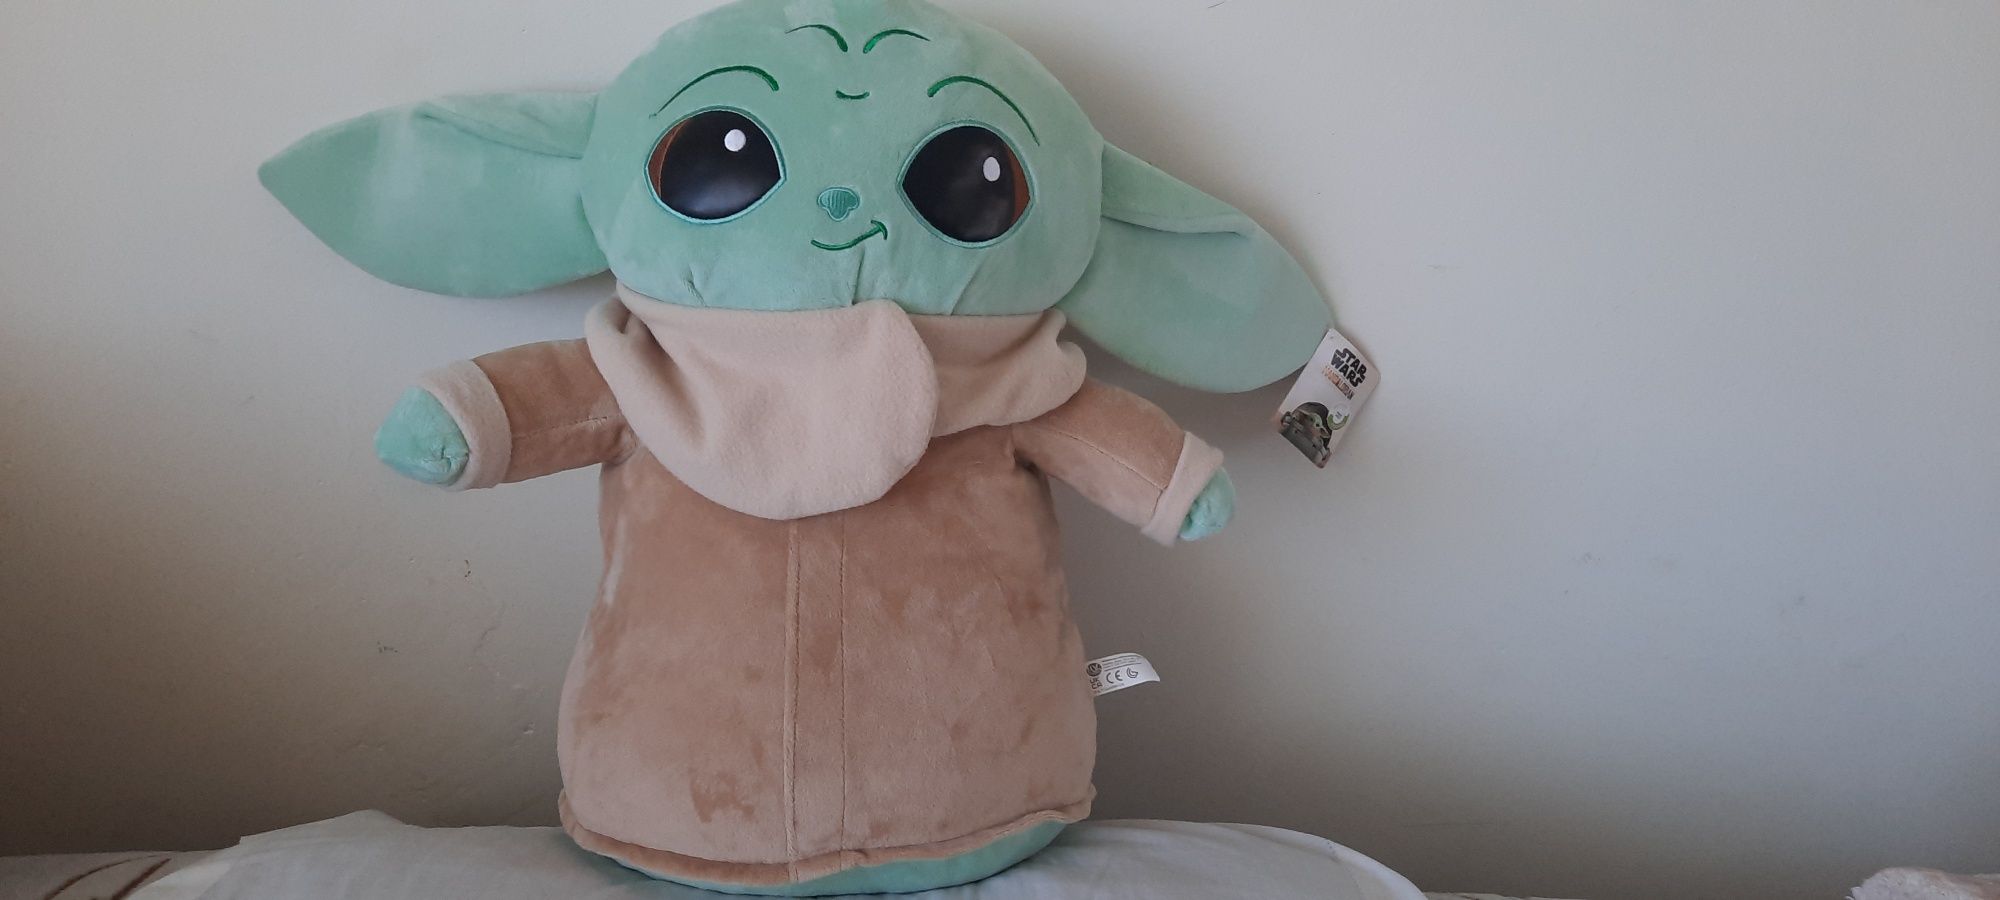 Baby Yoda 50cm, completamente novo!